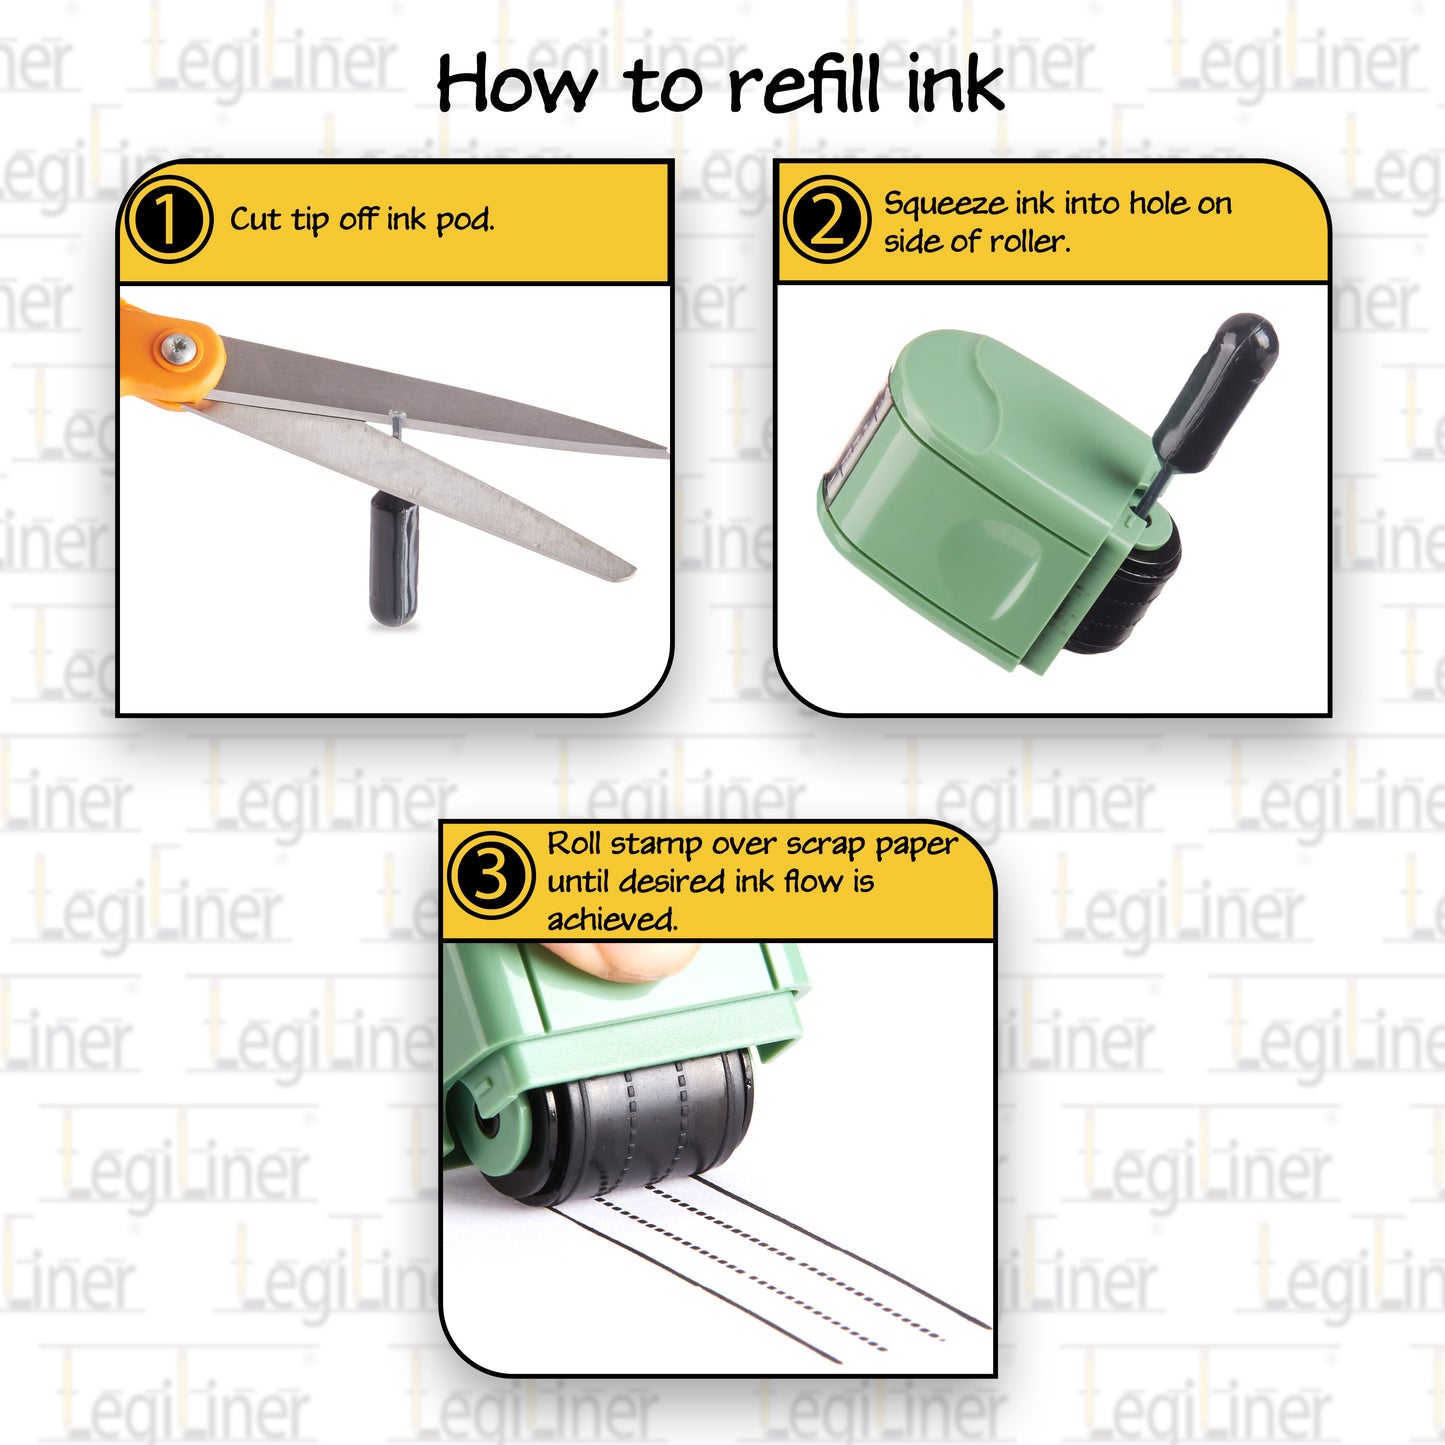 LegiLiner Self-Inking Teacher Stamp-18 mm Dotted Thirds Roller Stamp